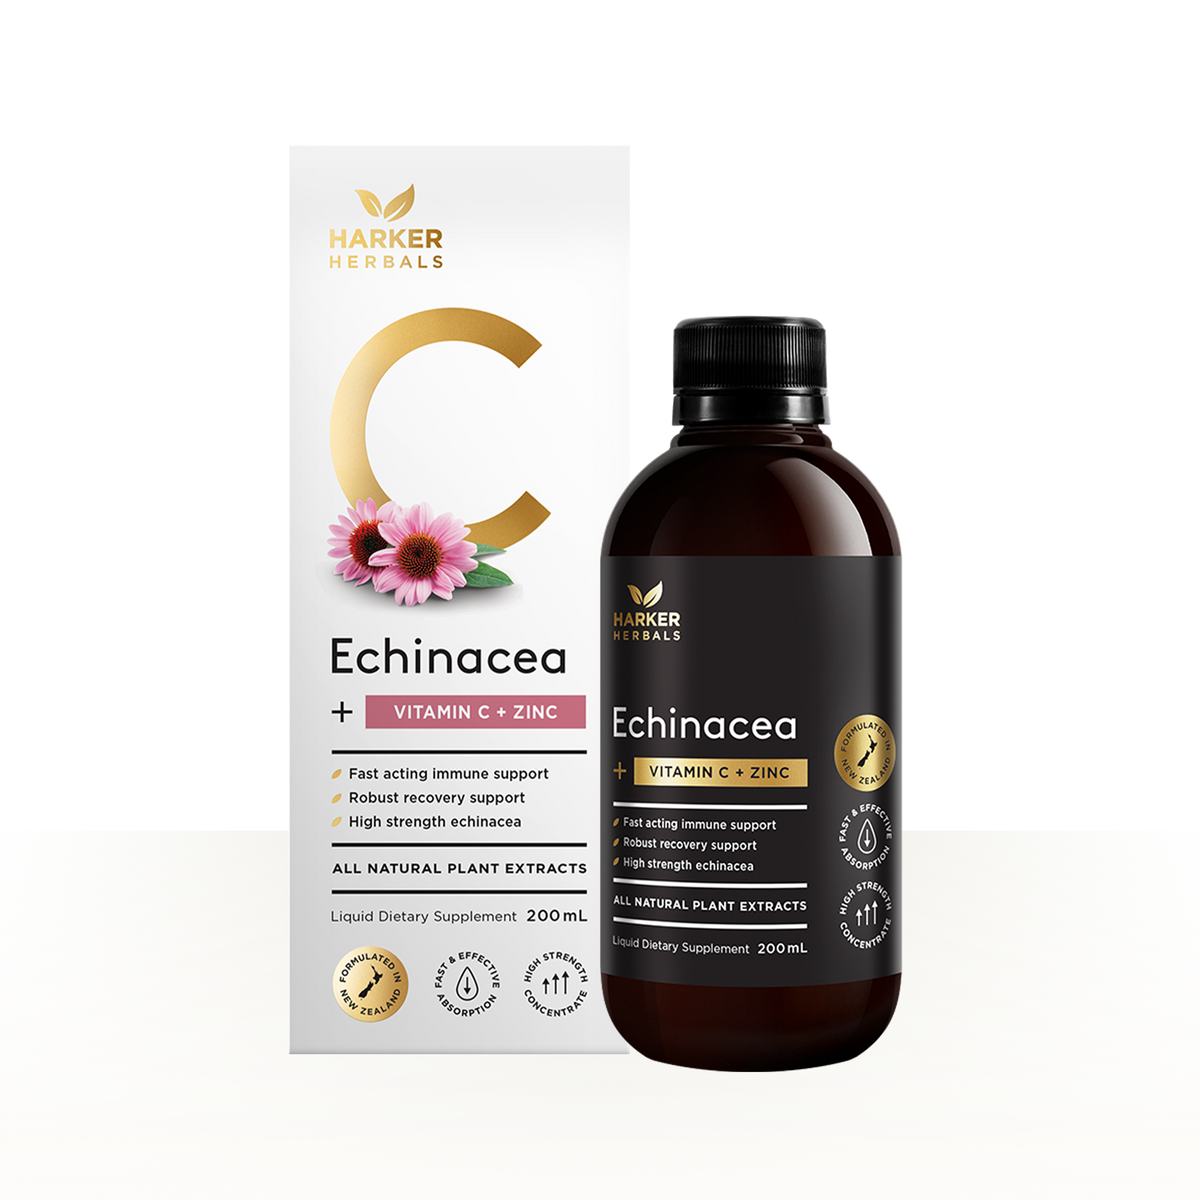 Echinacea, Vitamin C + Zinc